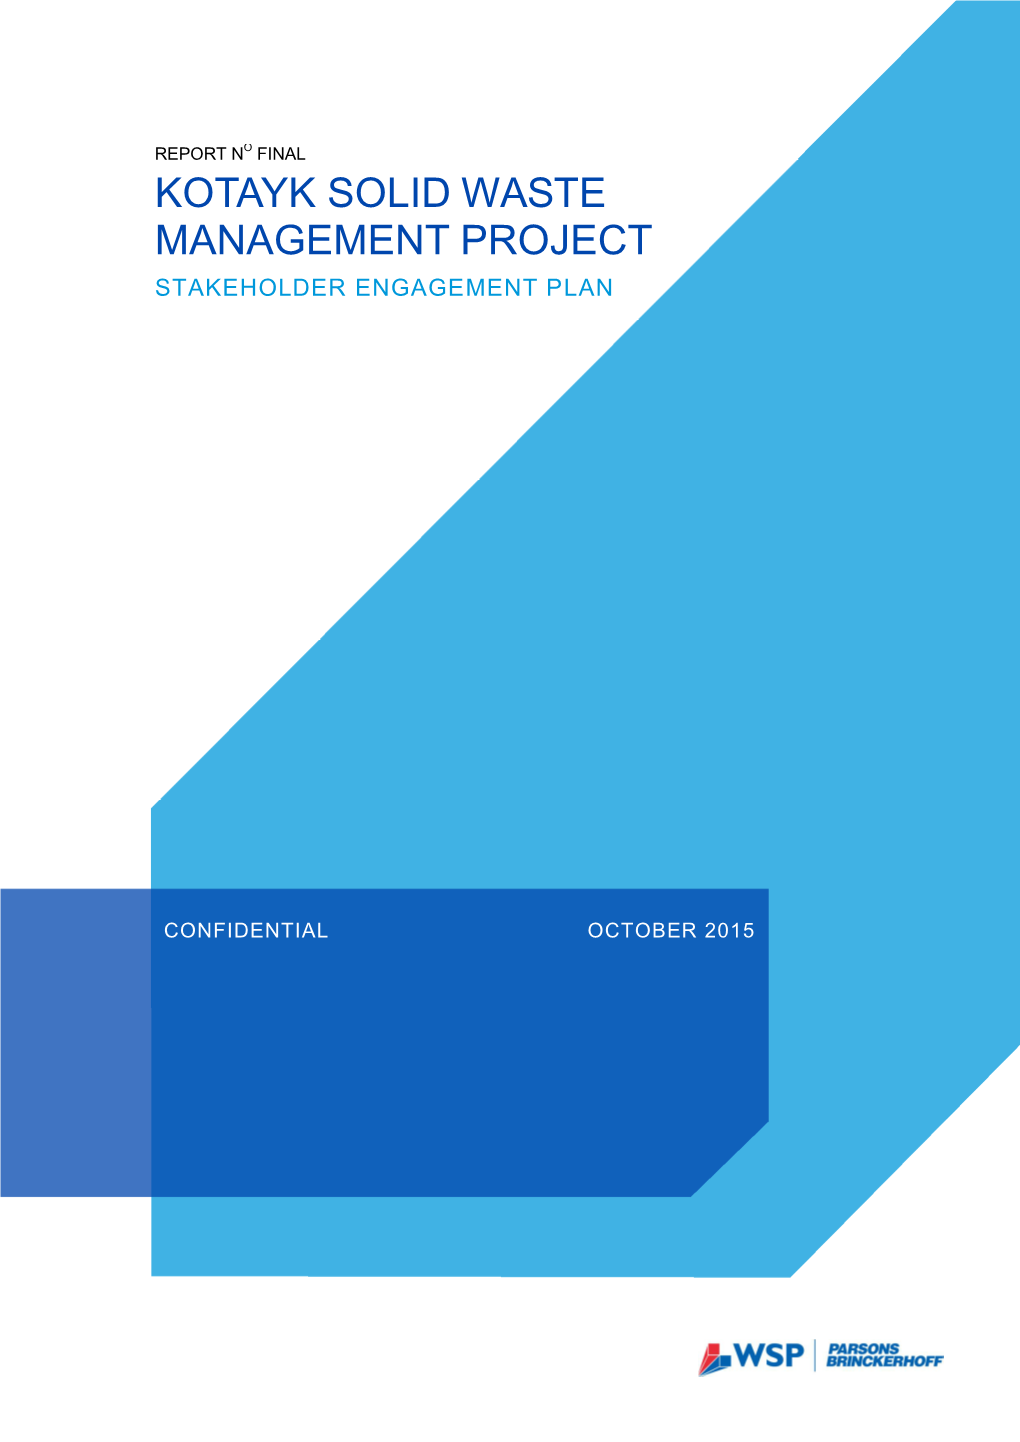 Kotayk Solid Waste Management Project Stakeholder Engagement Plan